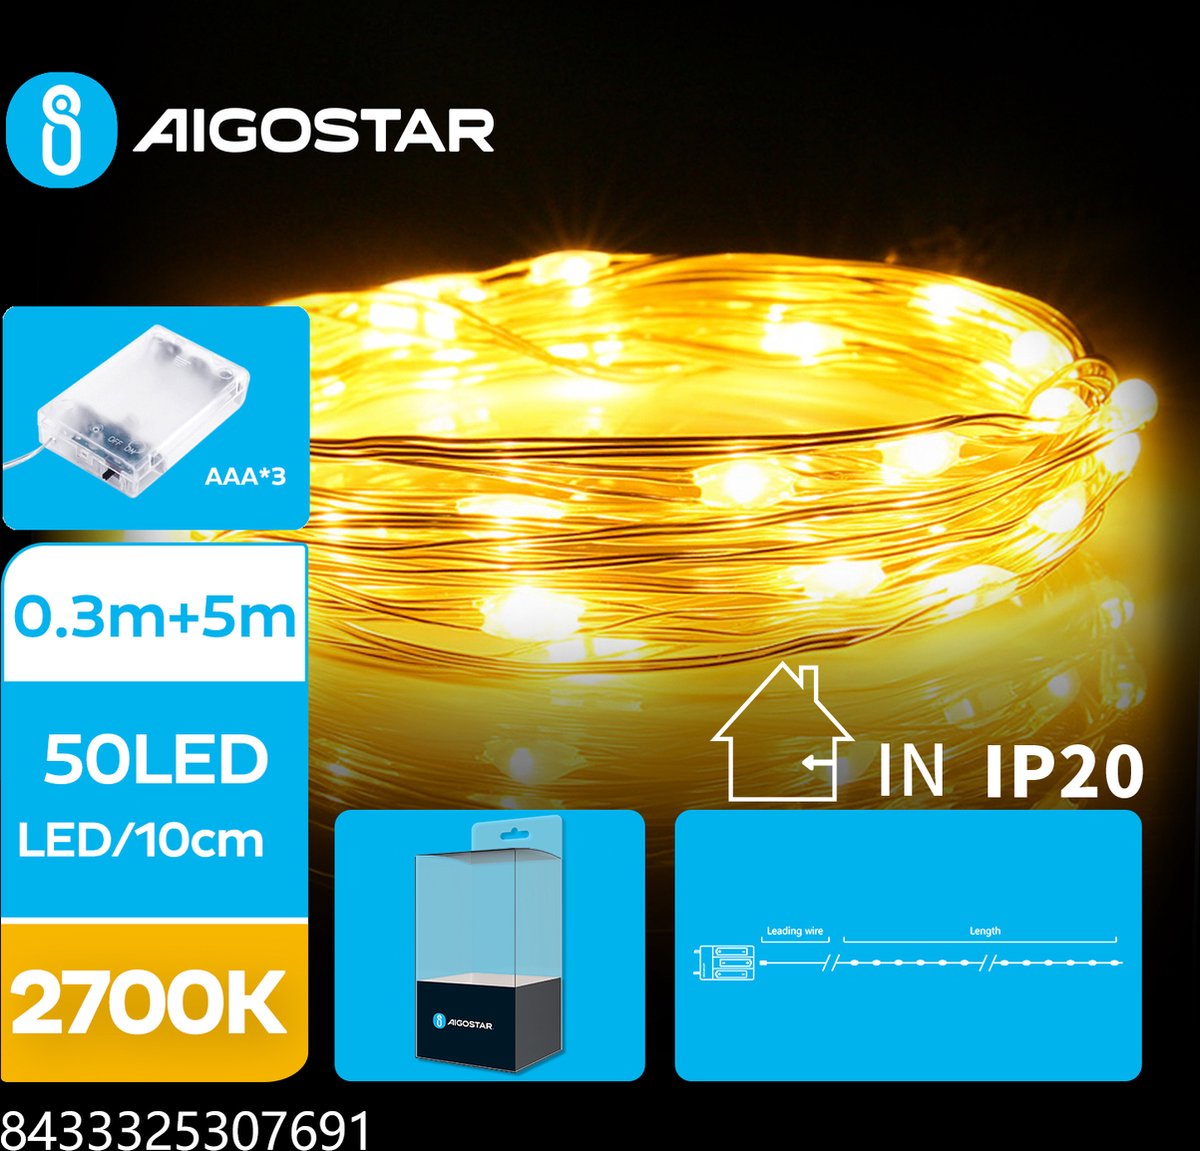 Aigostar - LED Kerstslinger - 50 LEDS - Koperdraad - 2700K - 5 meter - IP44 - 3x AAA batterij